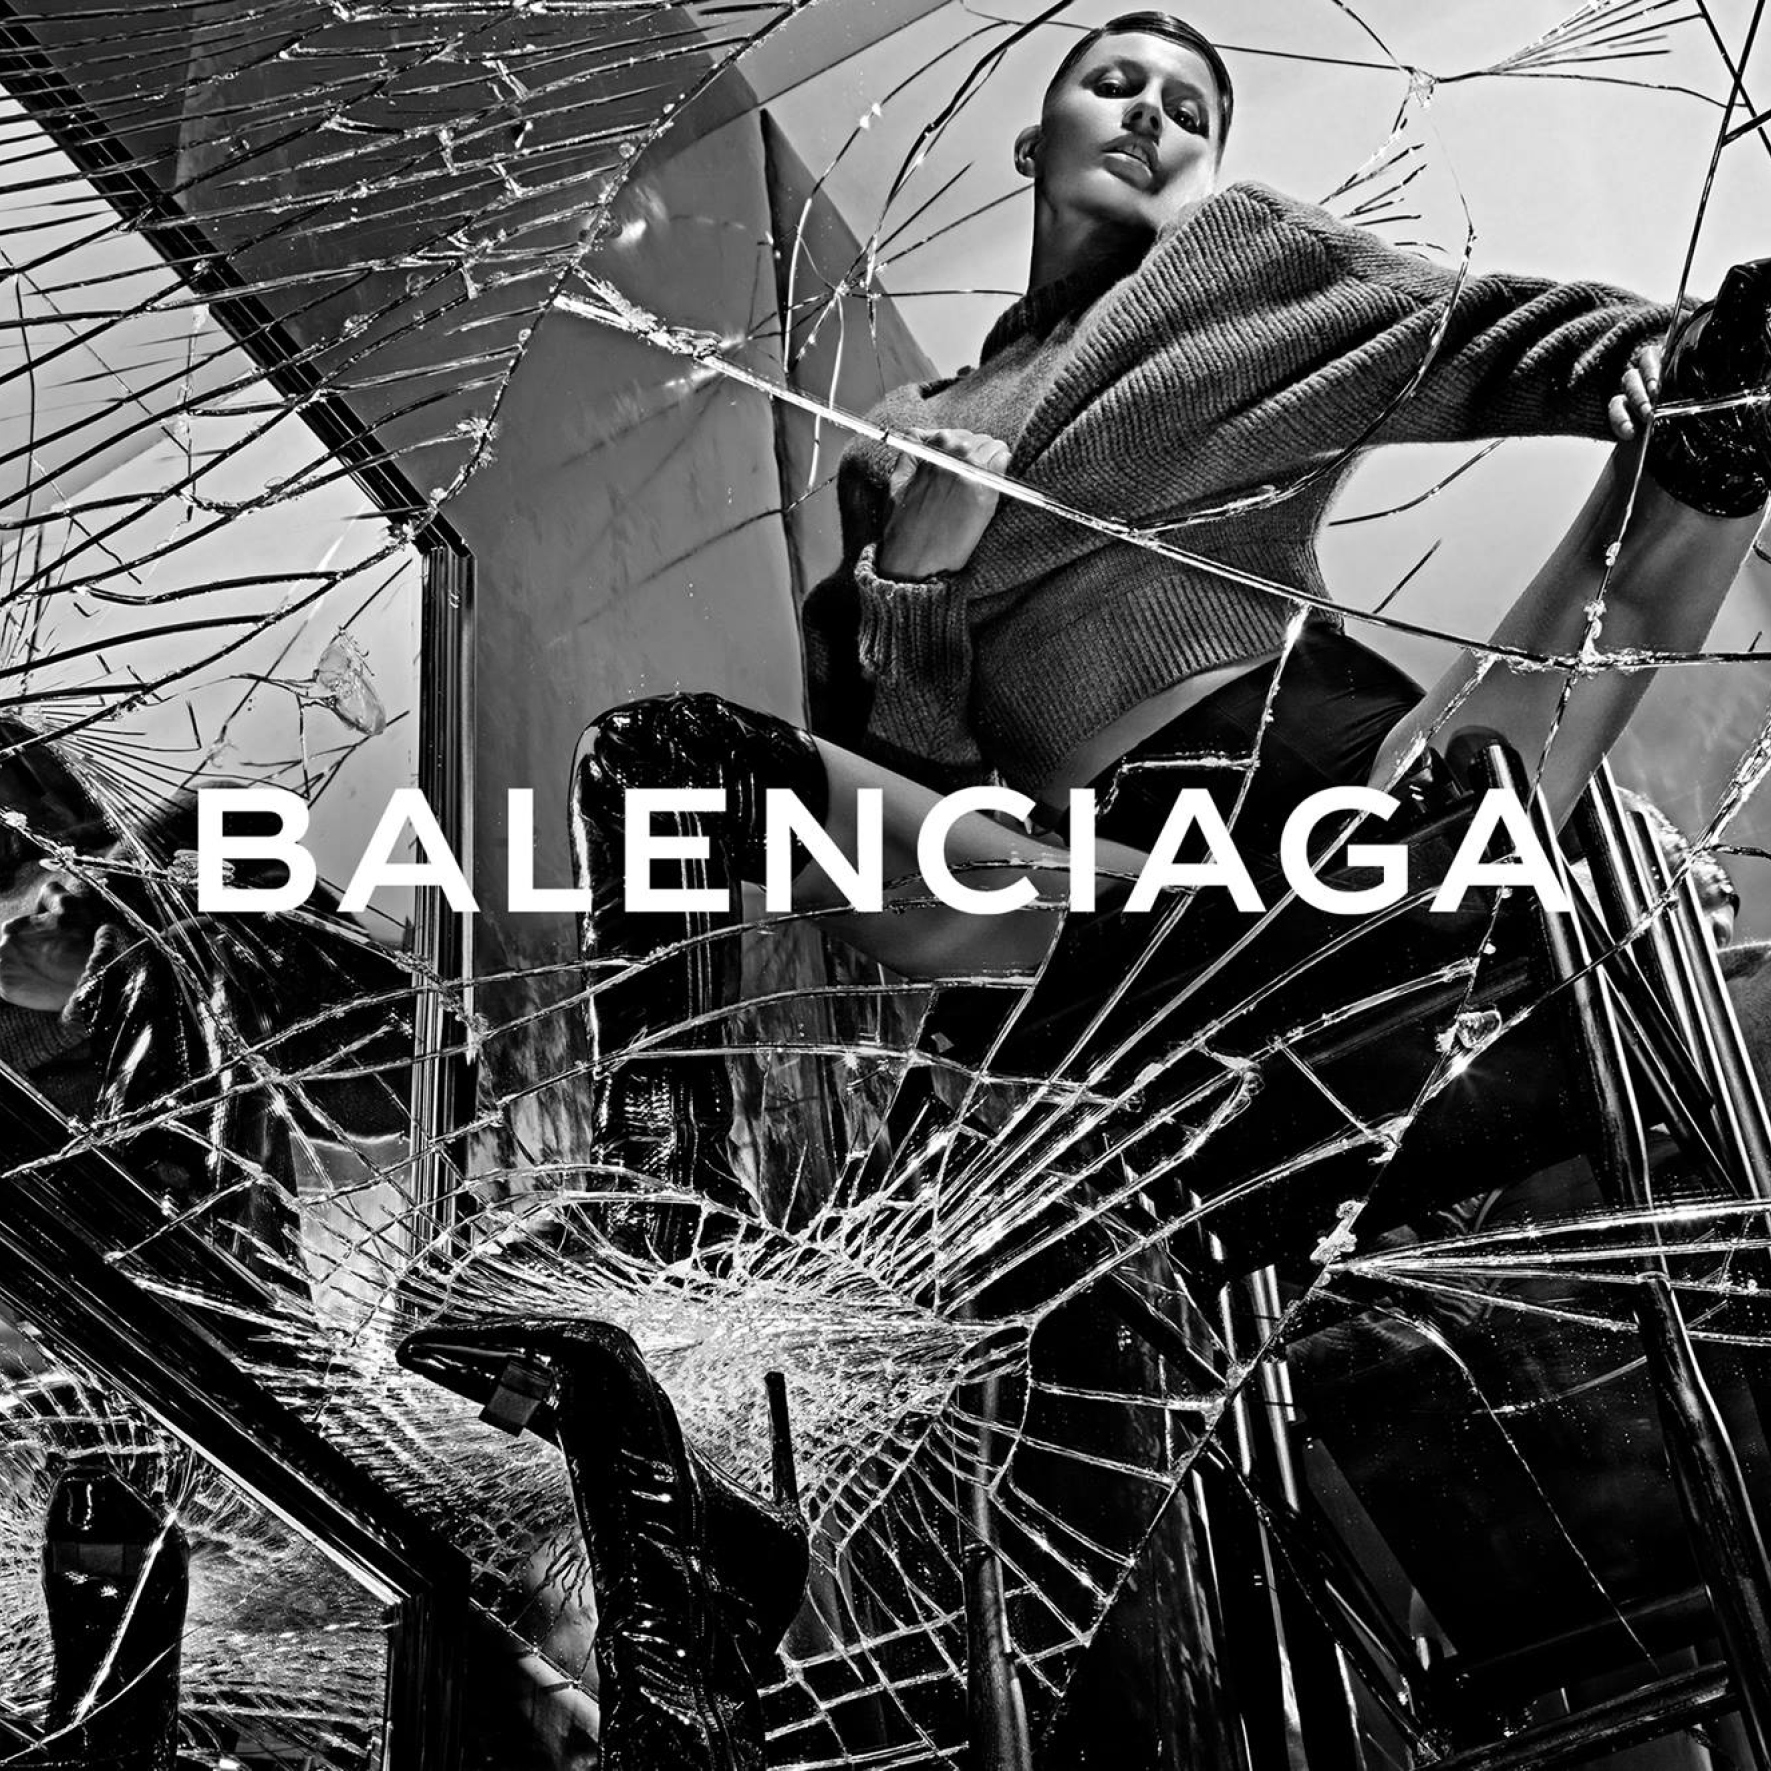 Balenciaga Designer Gives First Interview Since Brand's